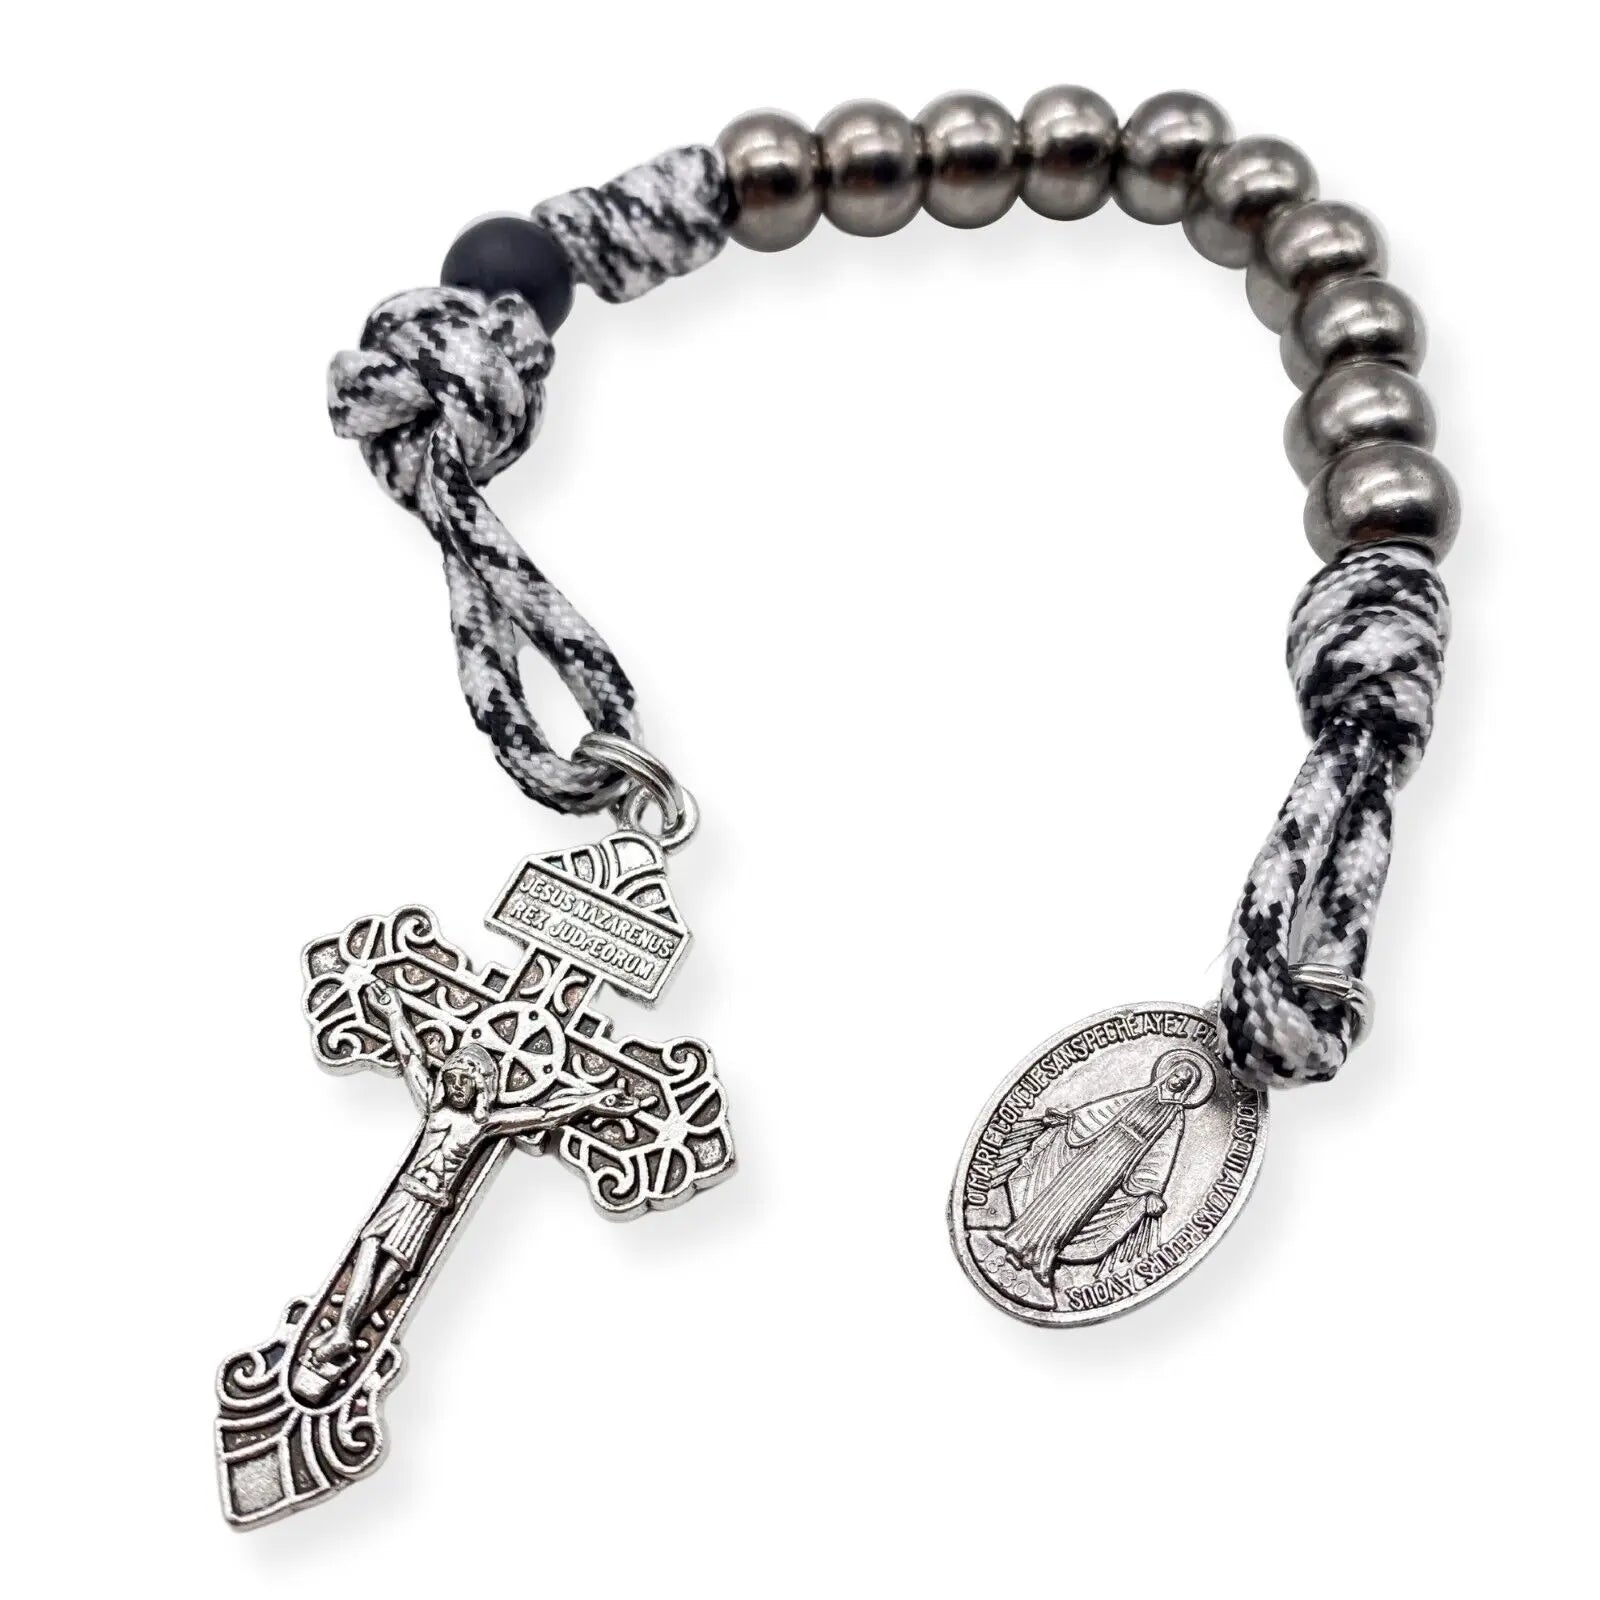 Pardon One Decade Paracord Rosary Black Beads Pocket Military Miraculous 